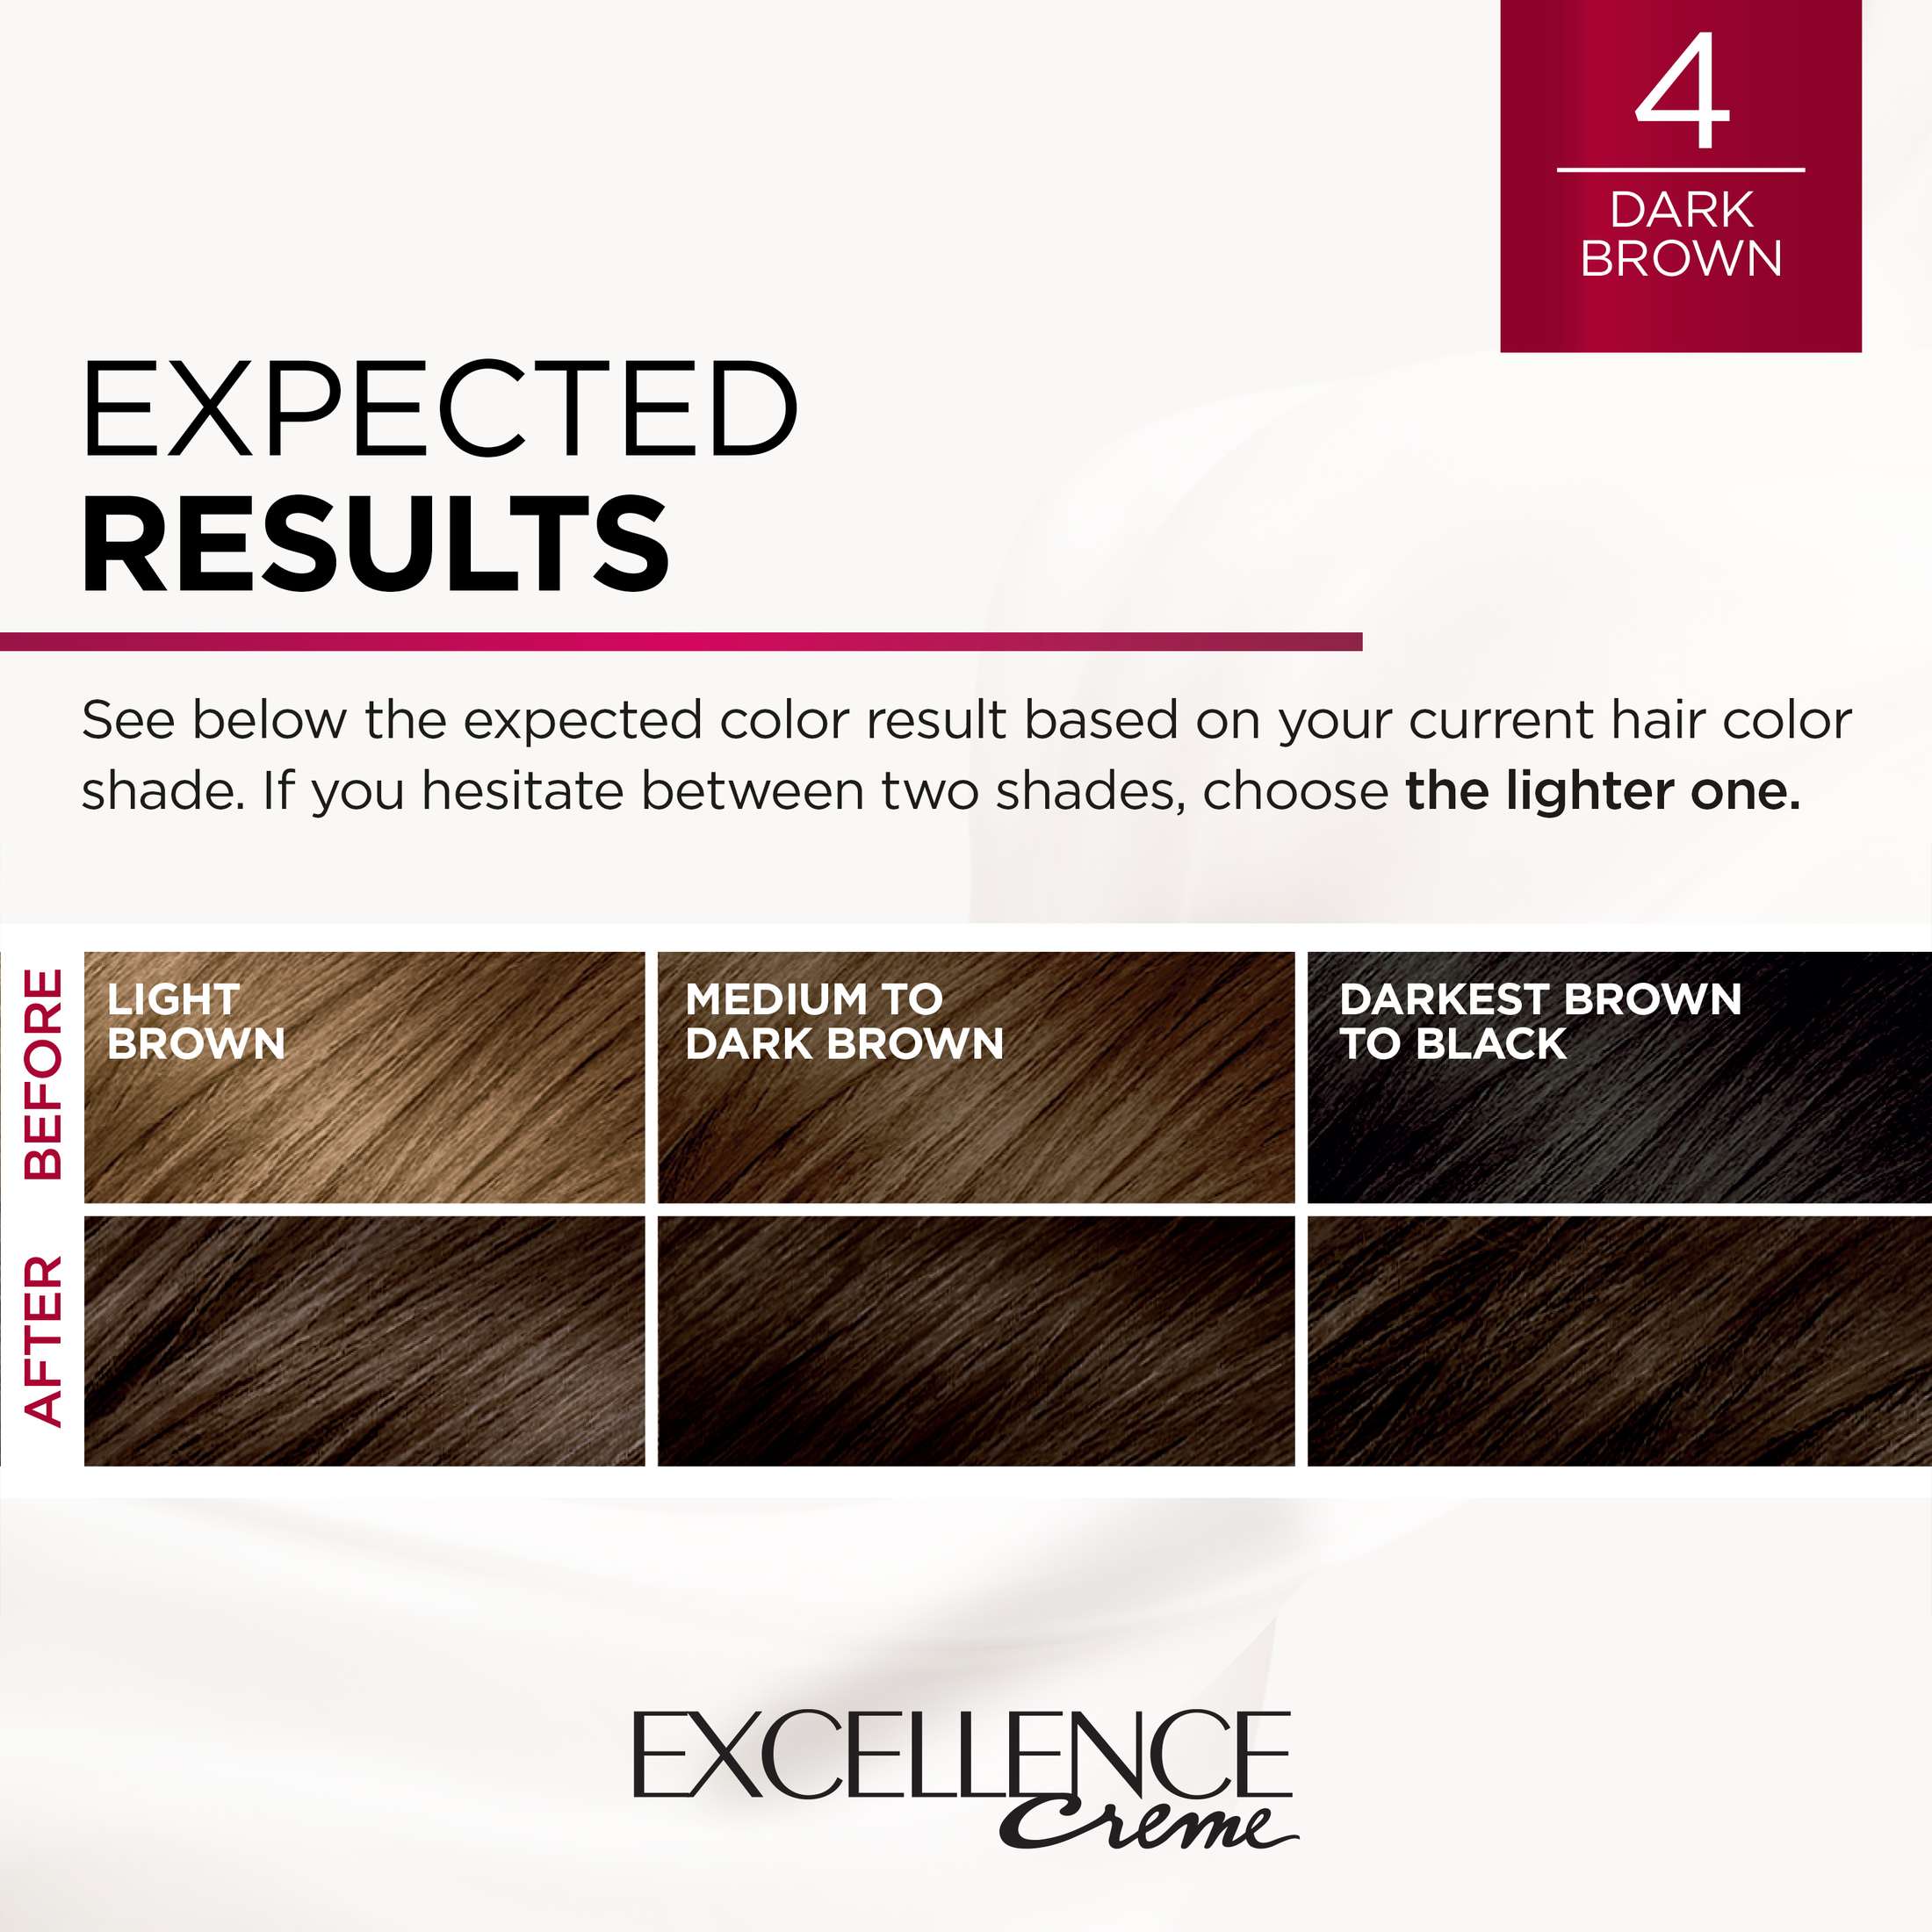 L'Oreal Paris Excellence Creme Permanent Hair Color, 4 Dark Brown - image 5 of 8